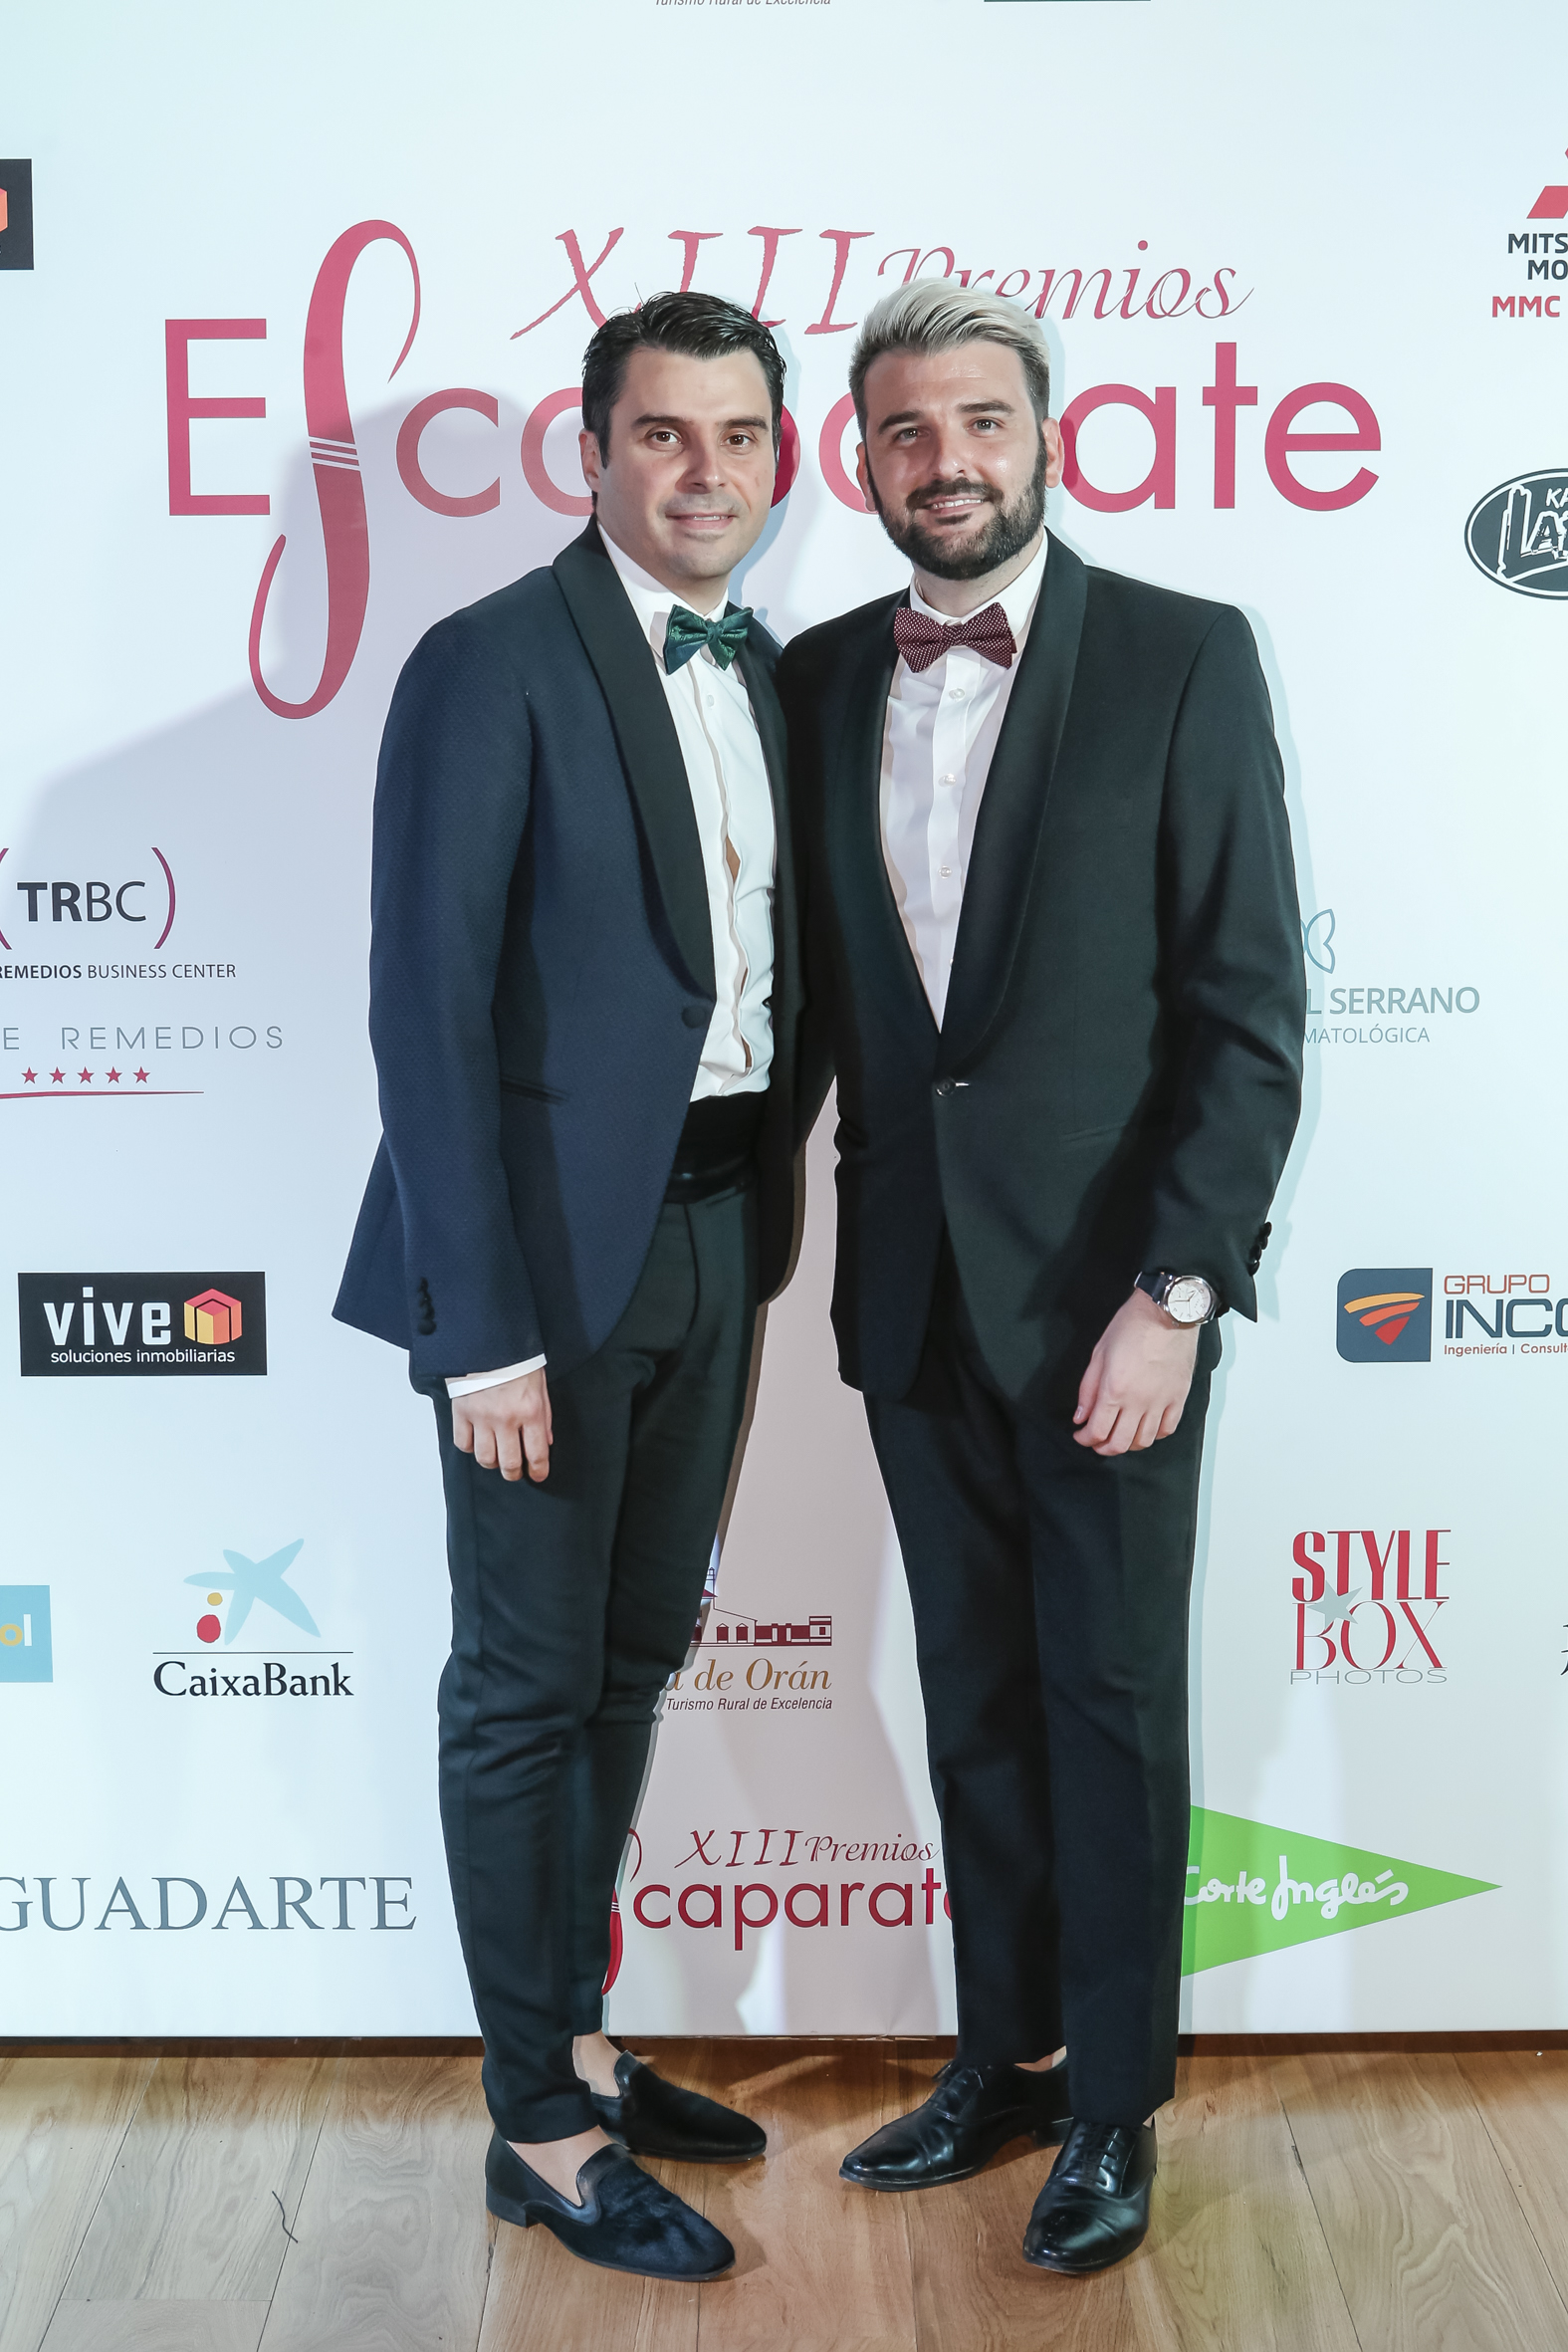 XIII Premios Escaparate Photocall